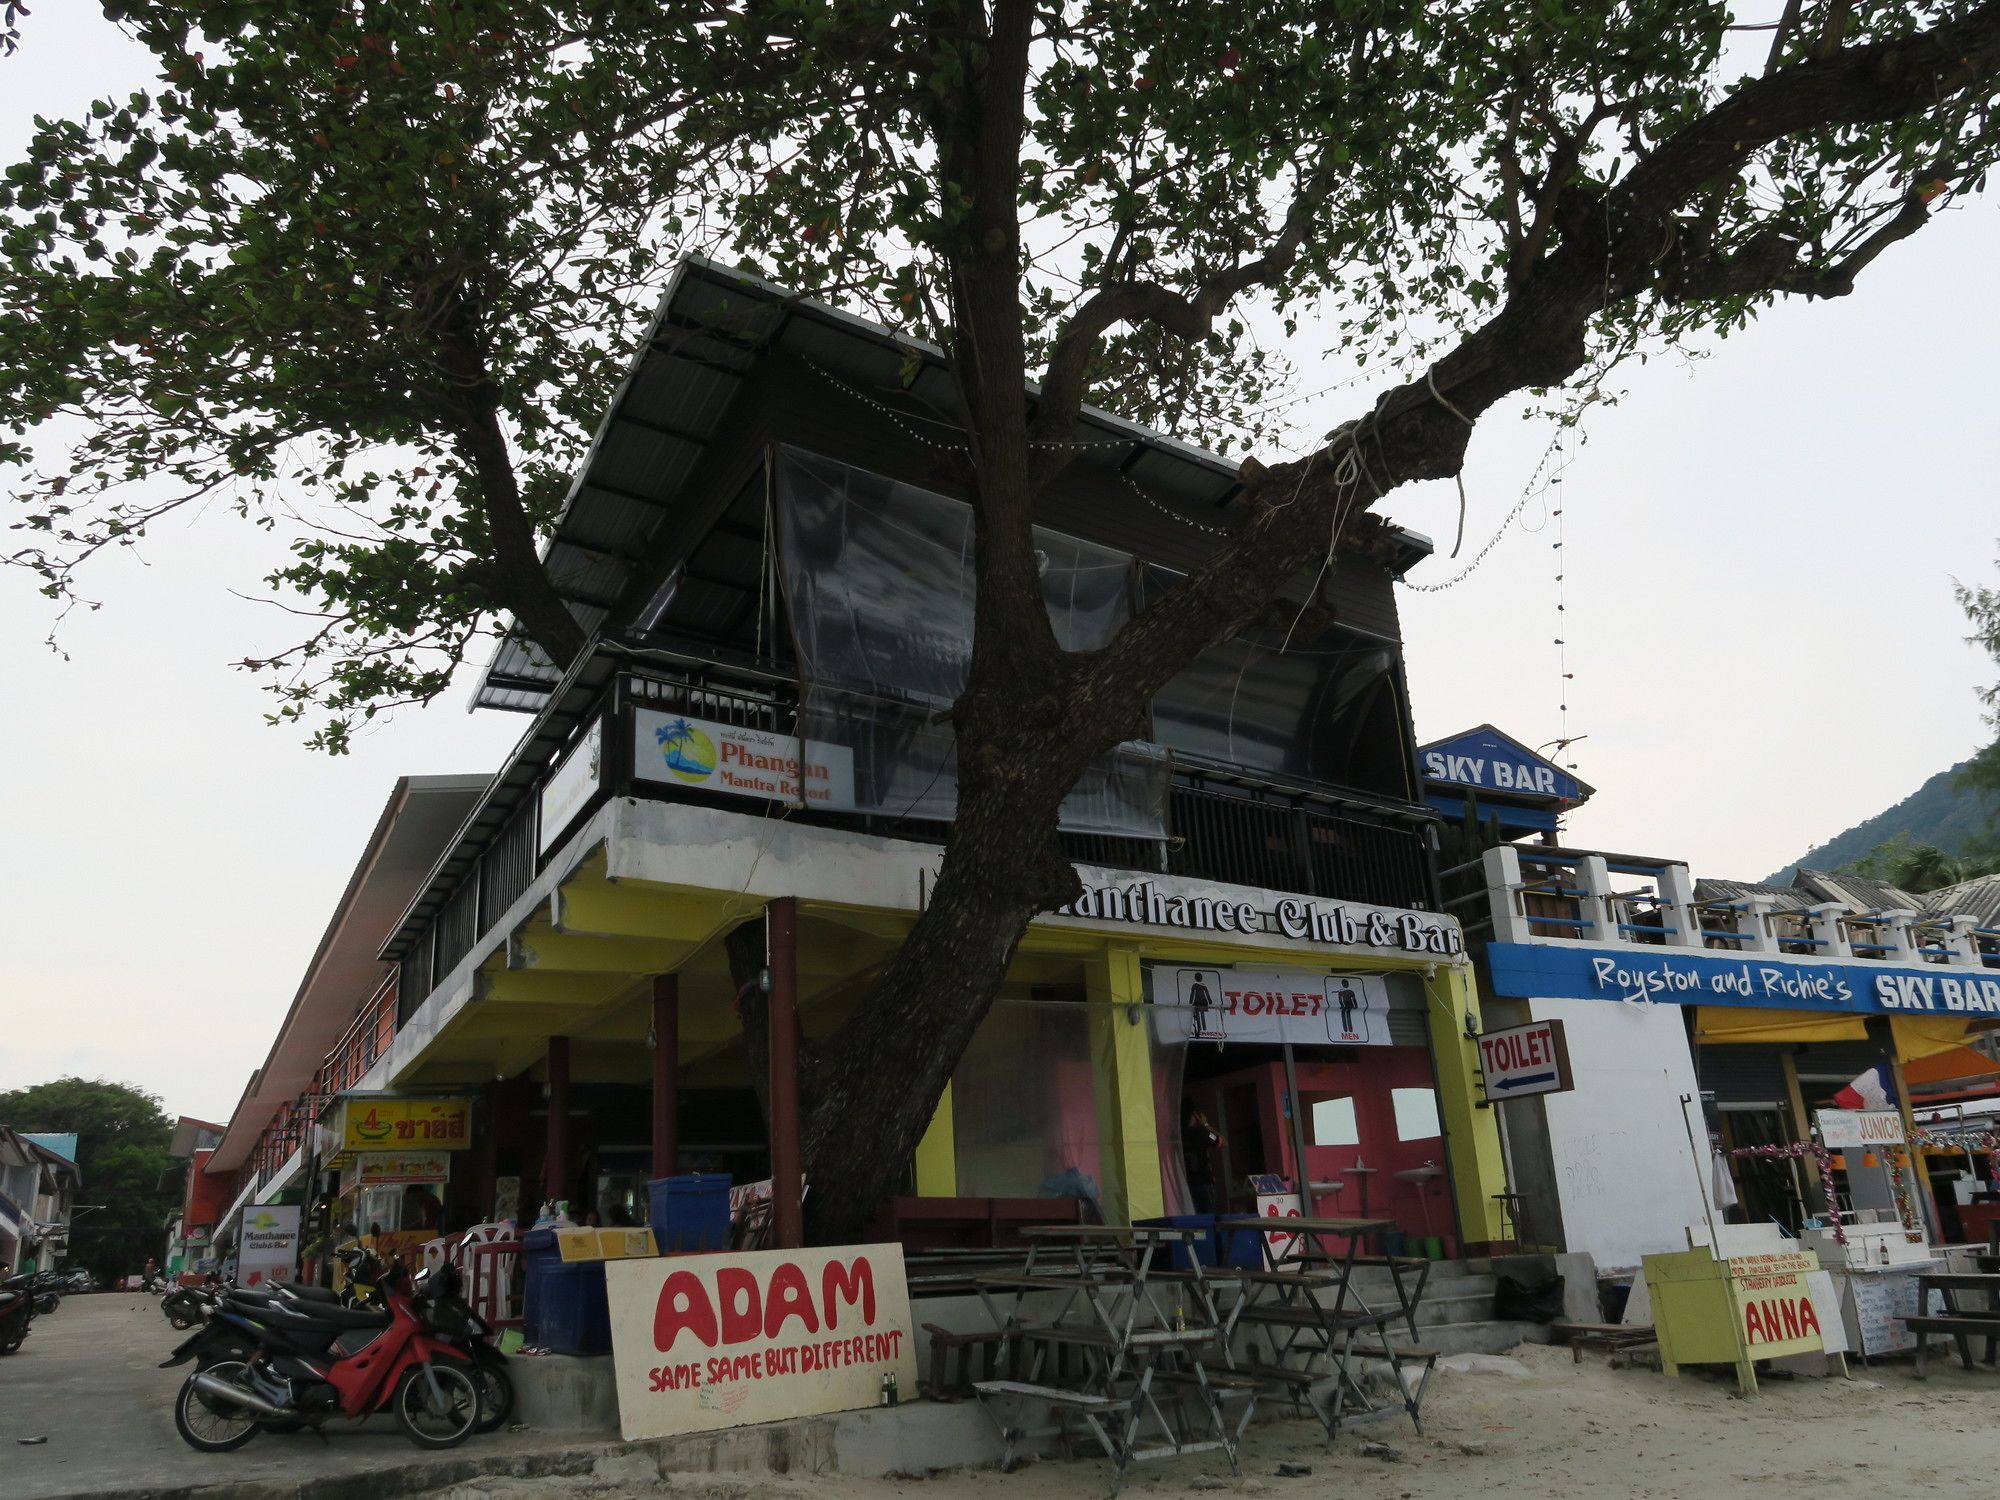 Phangan Mantra Resort Haad Rin Exterior photo